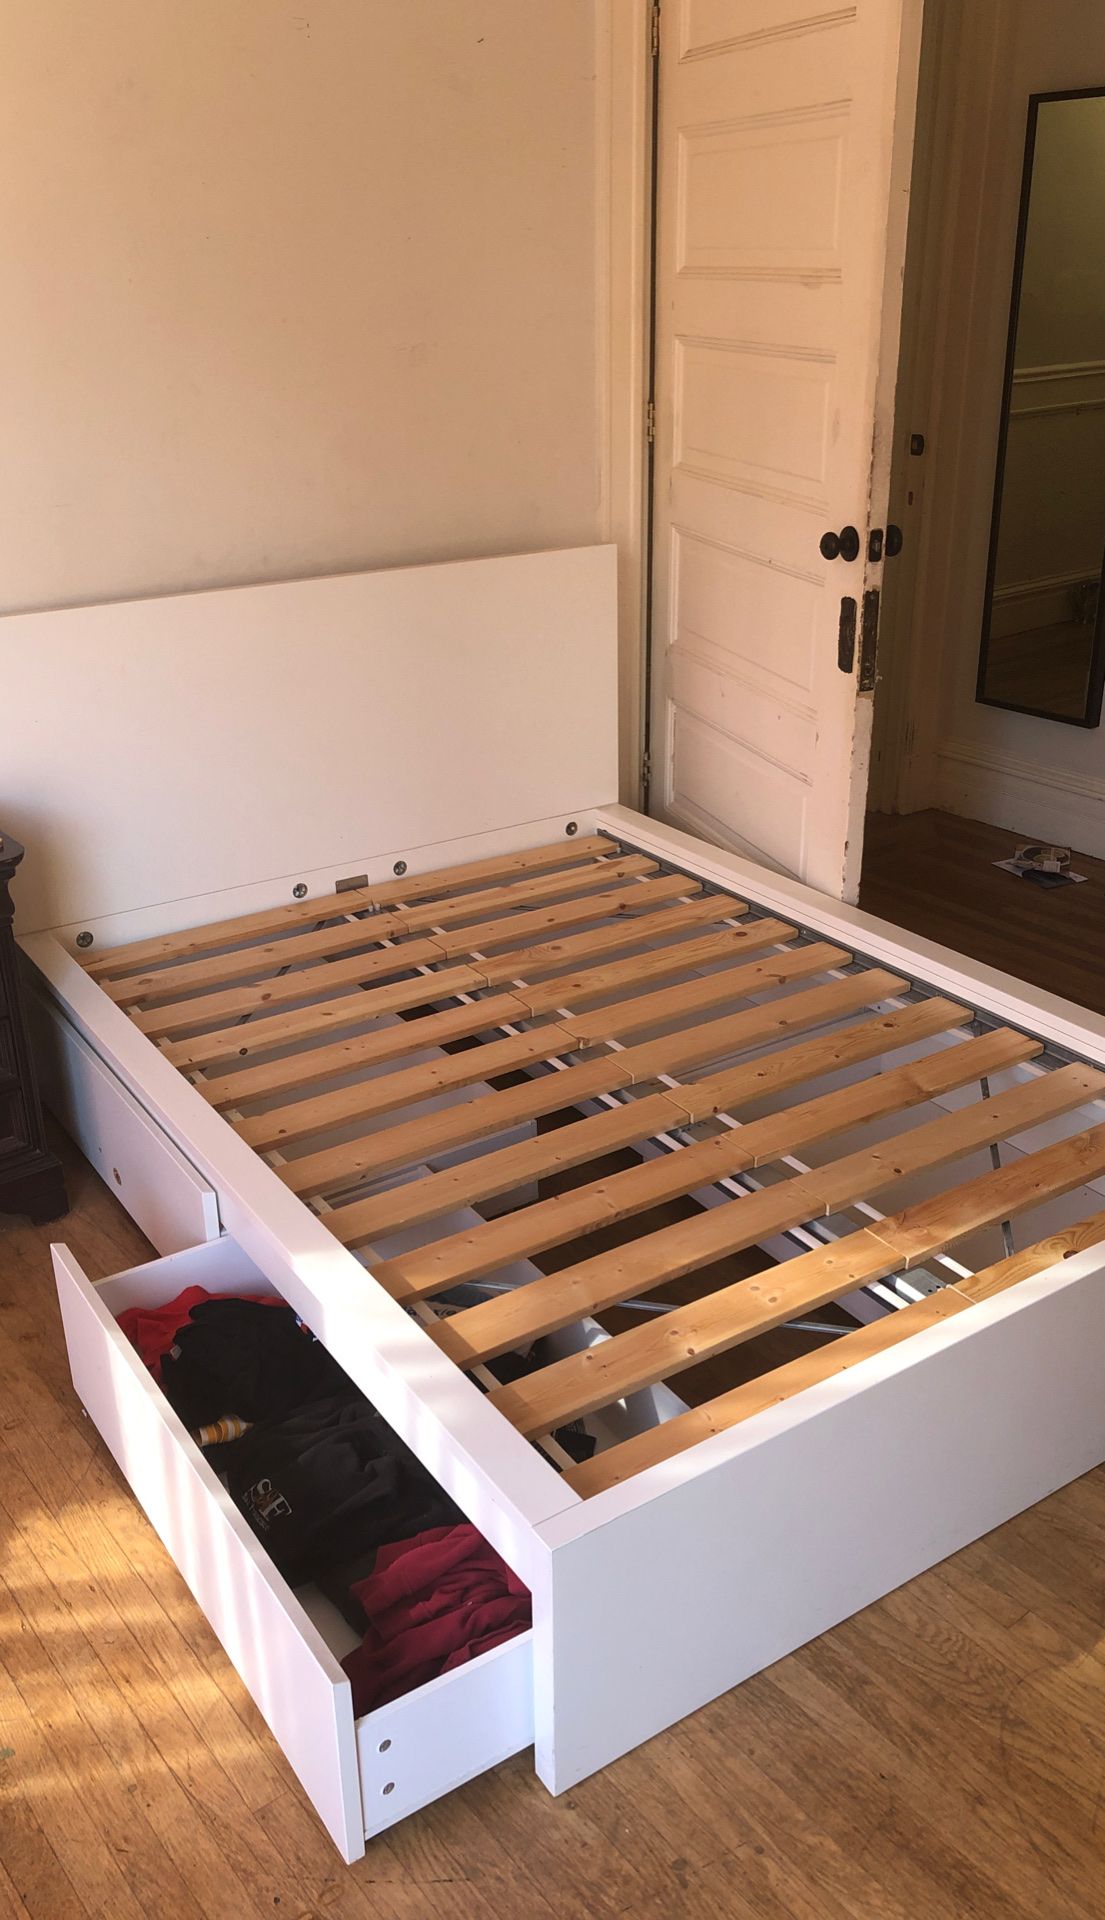 IKEA queen size bed frame w/storage